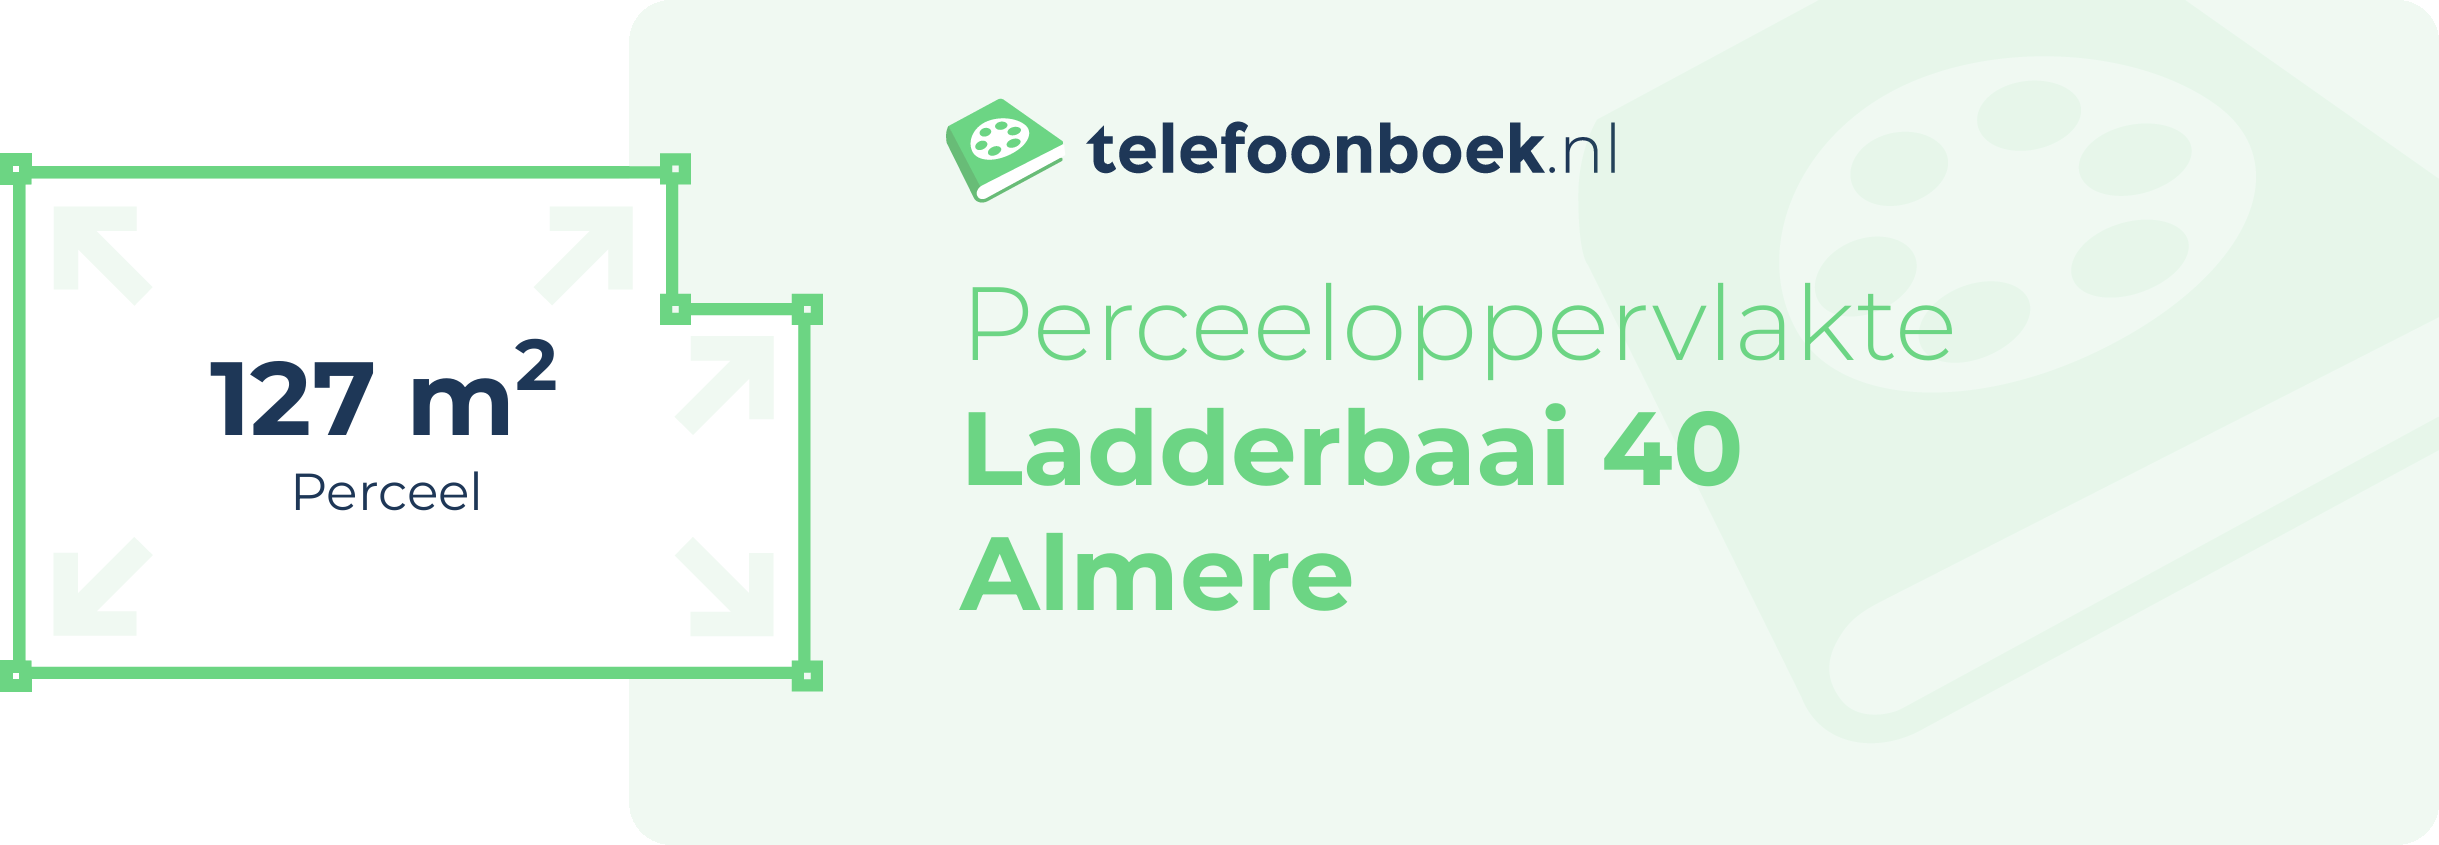 Perceeloppervlakte Ladderbaai 40 Almere